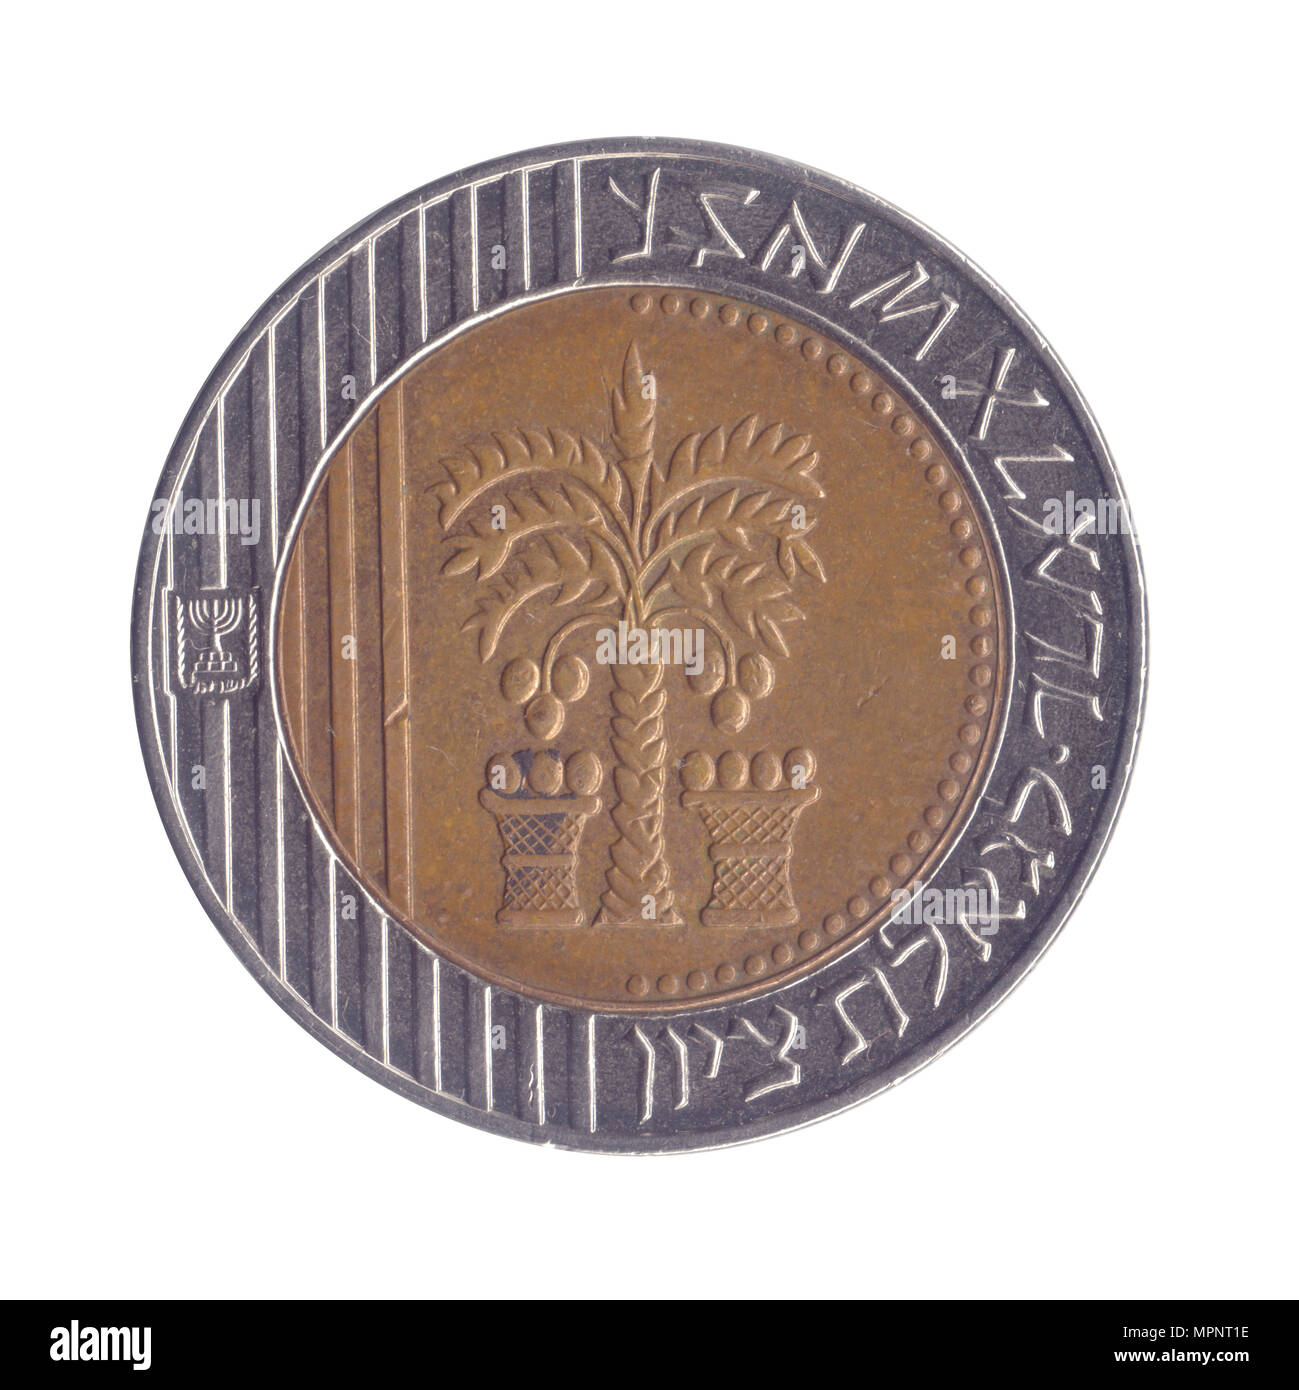 Ten New Israeli Shekel coin (ILS or NIS) on white background Stock Photo